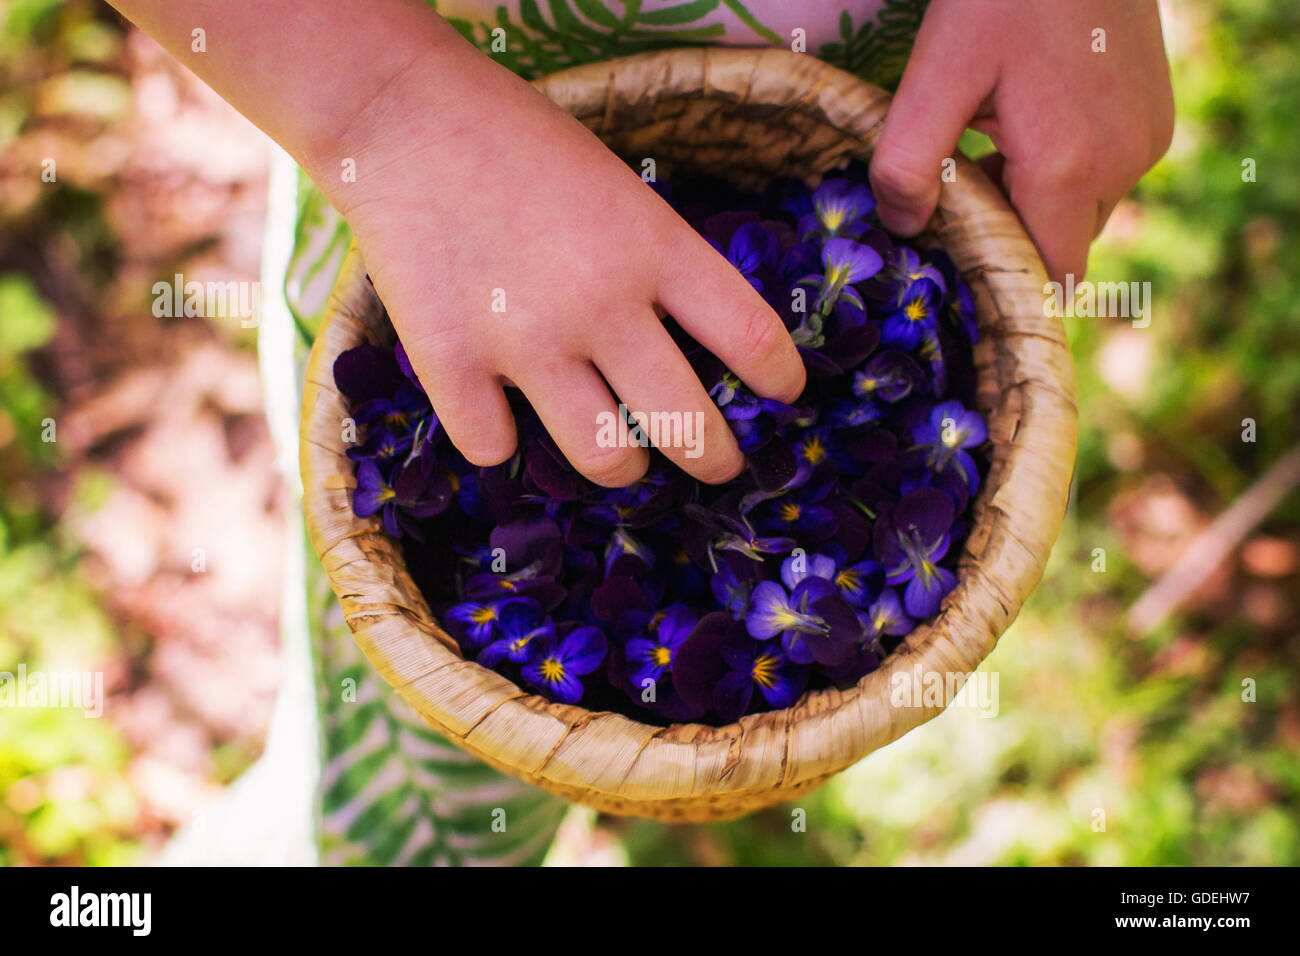 Girl holding basket with violet flower petals Stock Photo